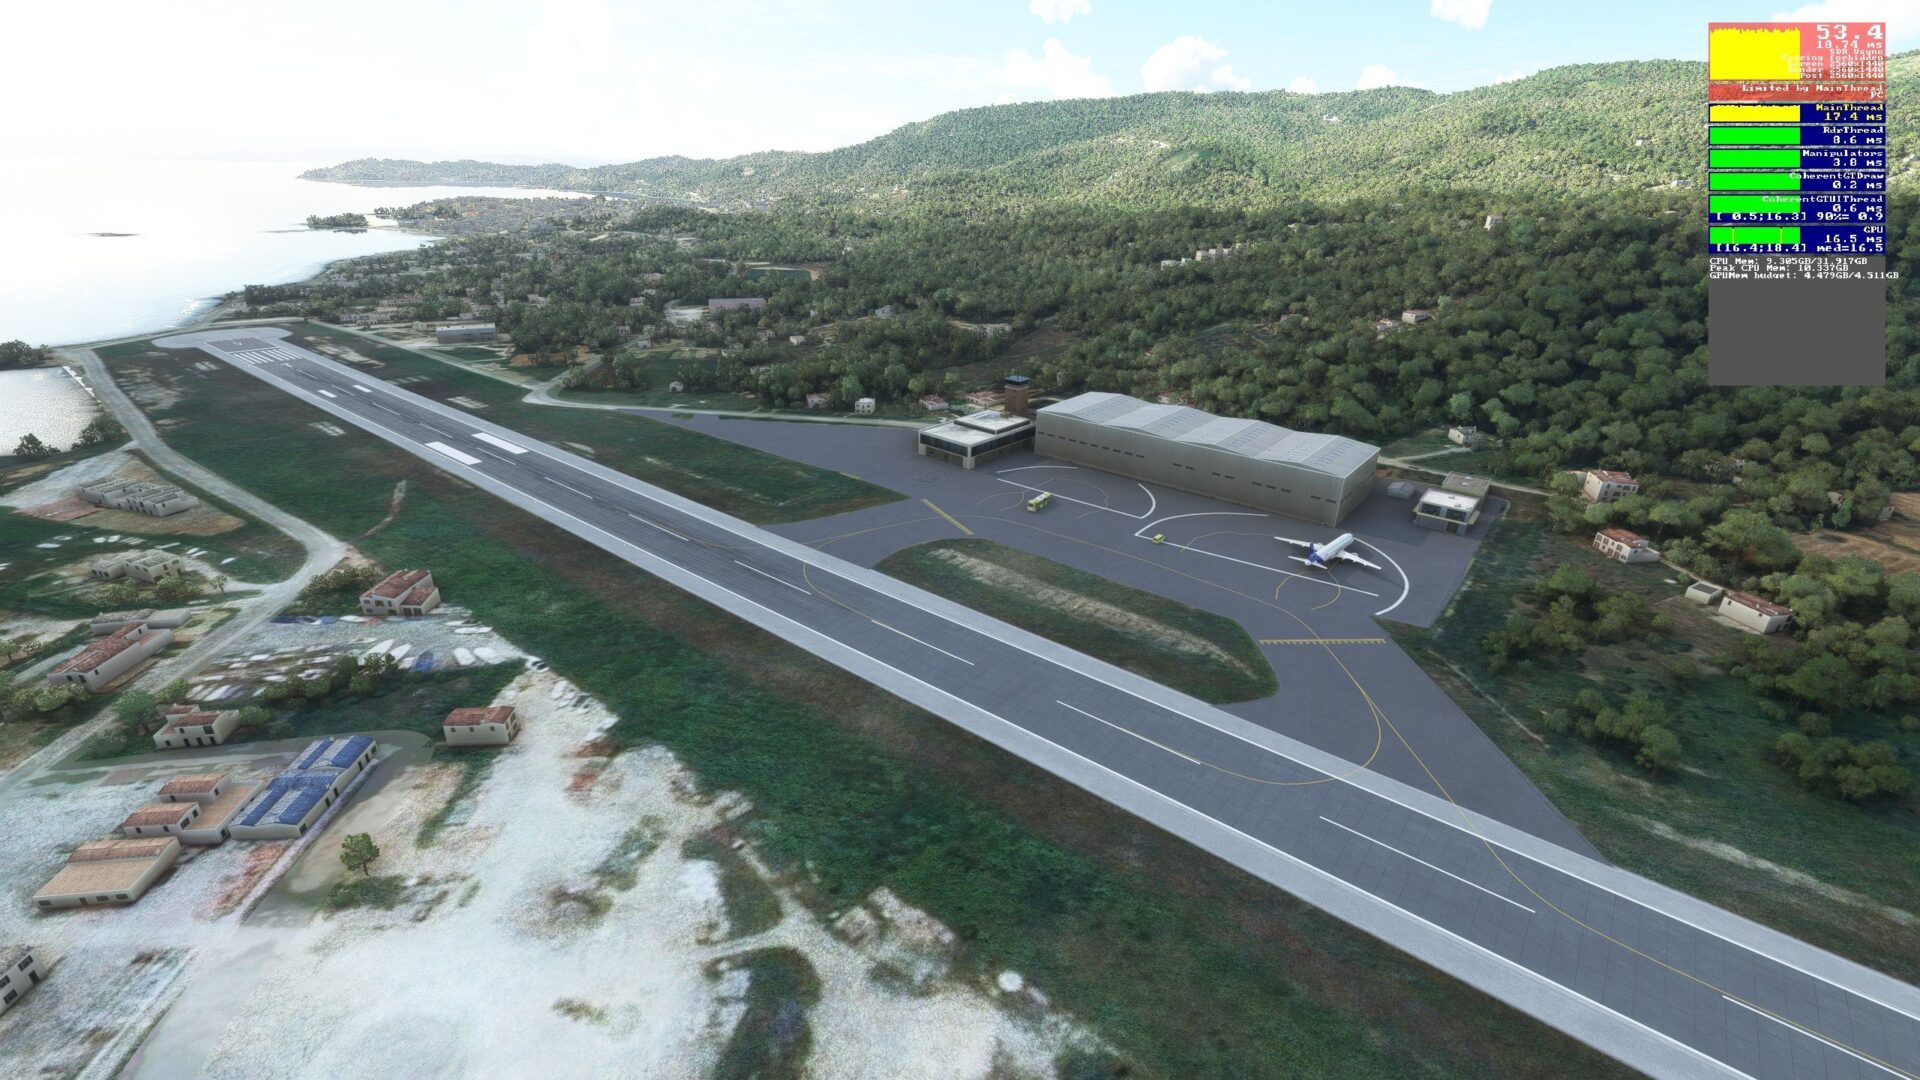 skiathos-airport-review-1-2463834